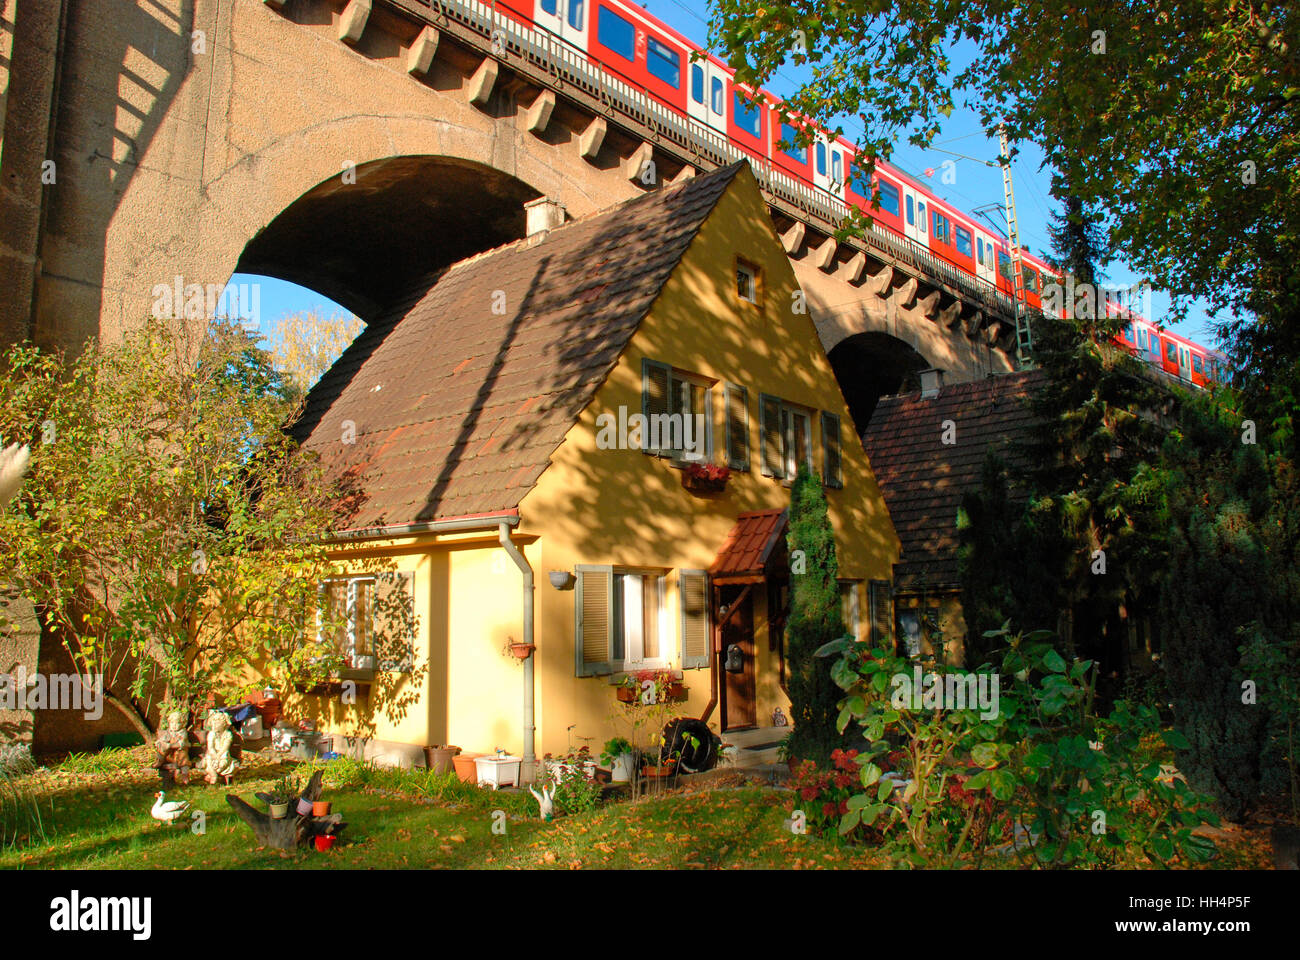 casa-construida-bajo-el-puente-del-tren-nordbahnhof-baden-wuerttemberg-stuttgart-alemania-hh4p5f.jpg